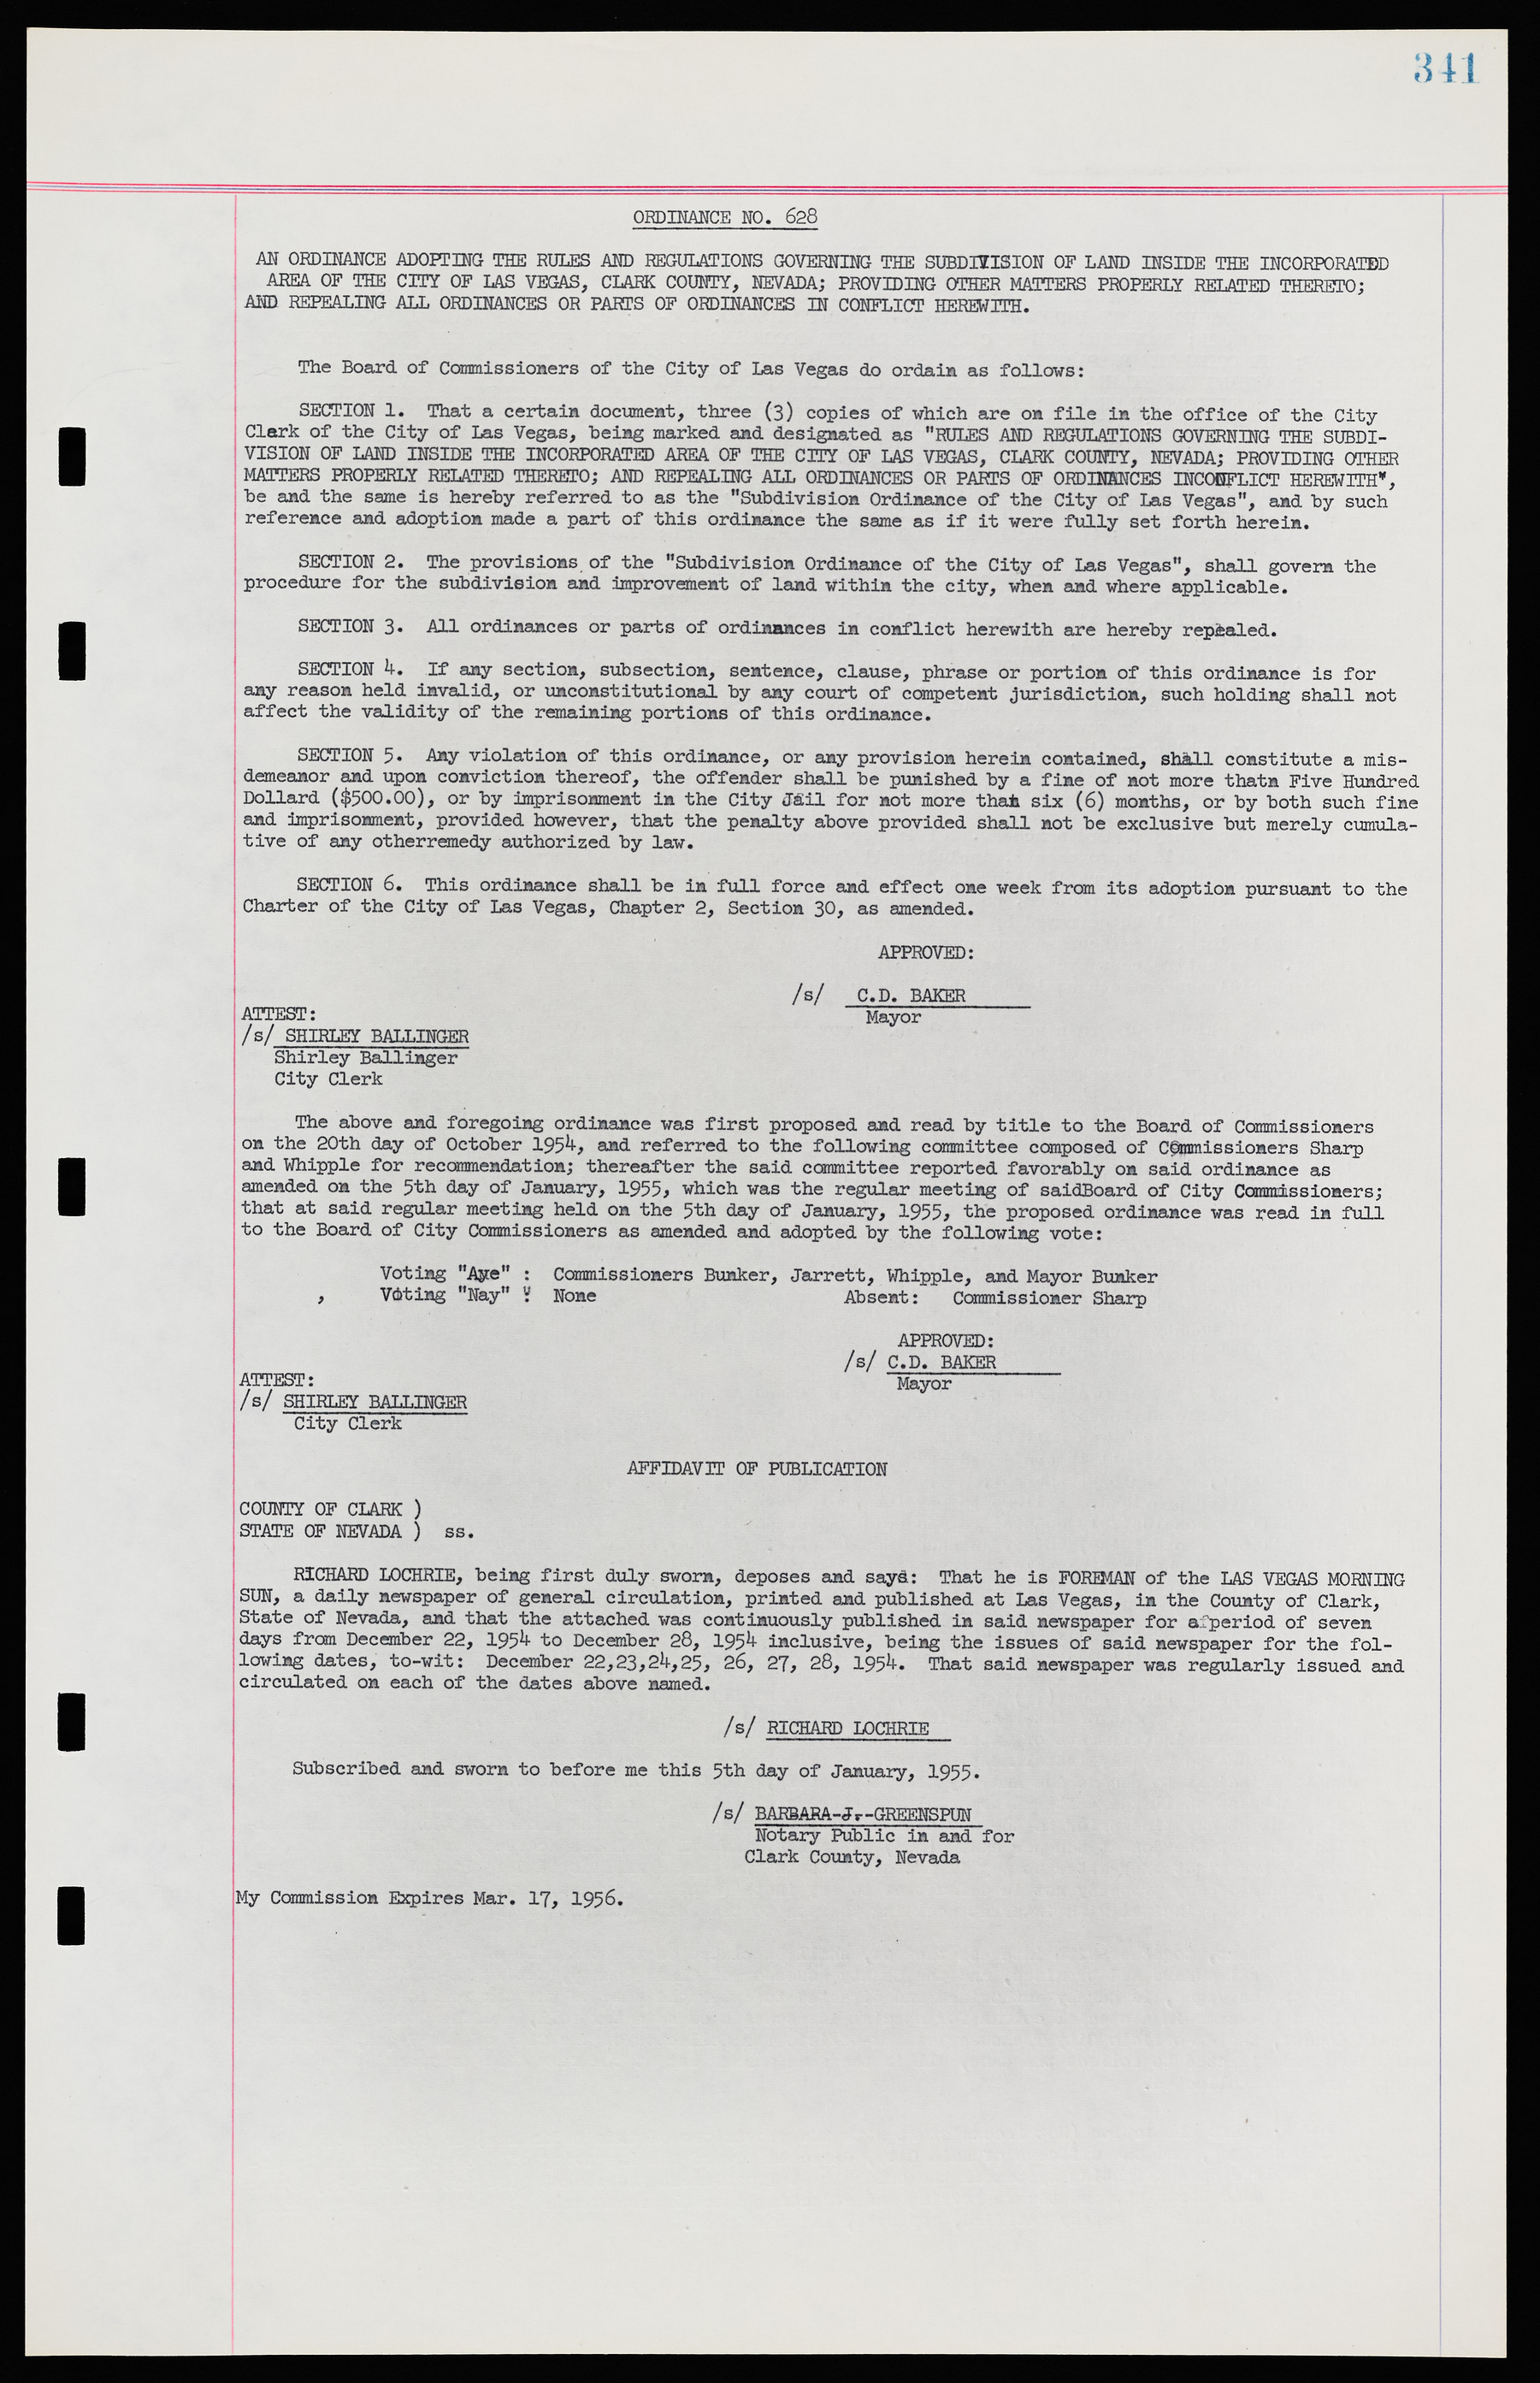 Las Vegas City Ordinances, November 13, 1950 to August 6, 1958, lvc000015-349